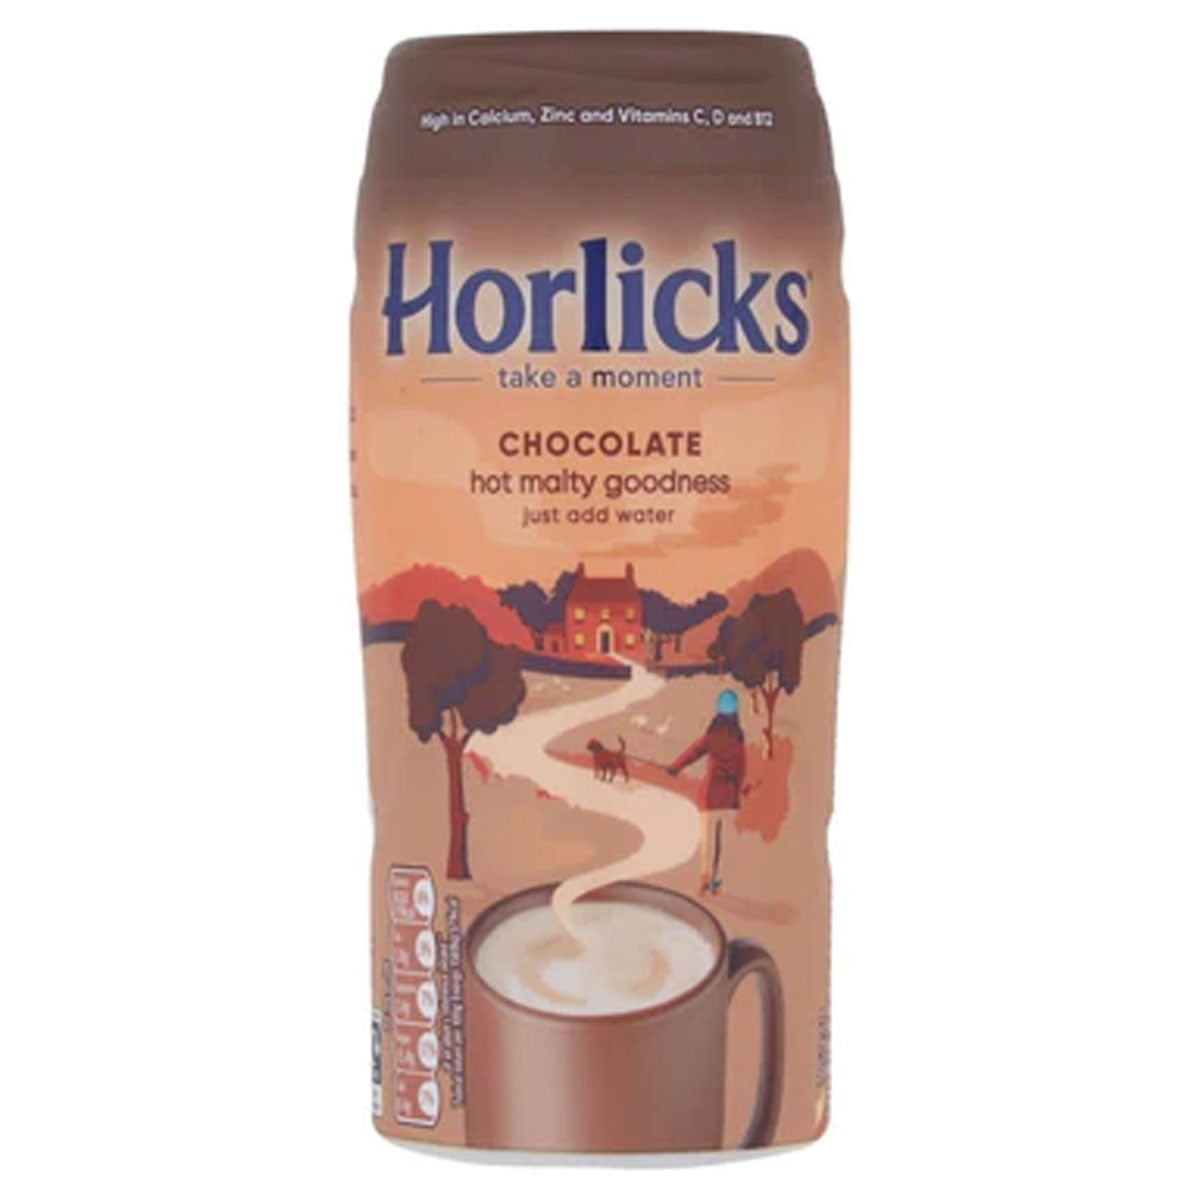 A bottle of Horlicks - Chocolate Malt - 400g hot milk.